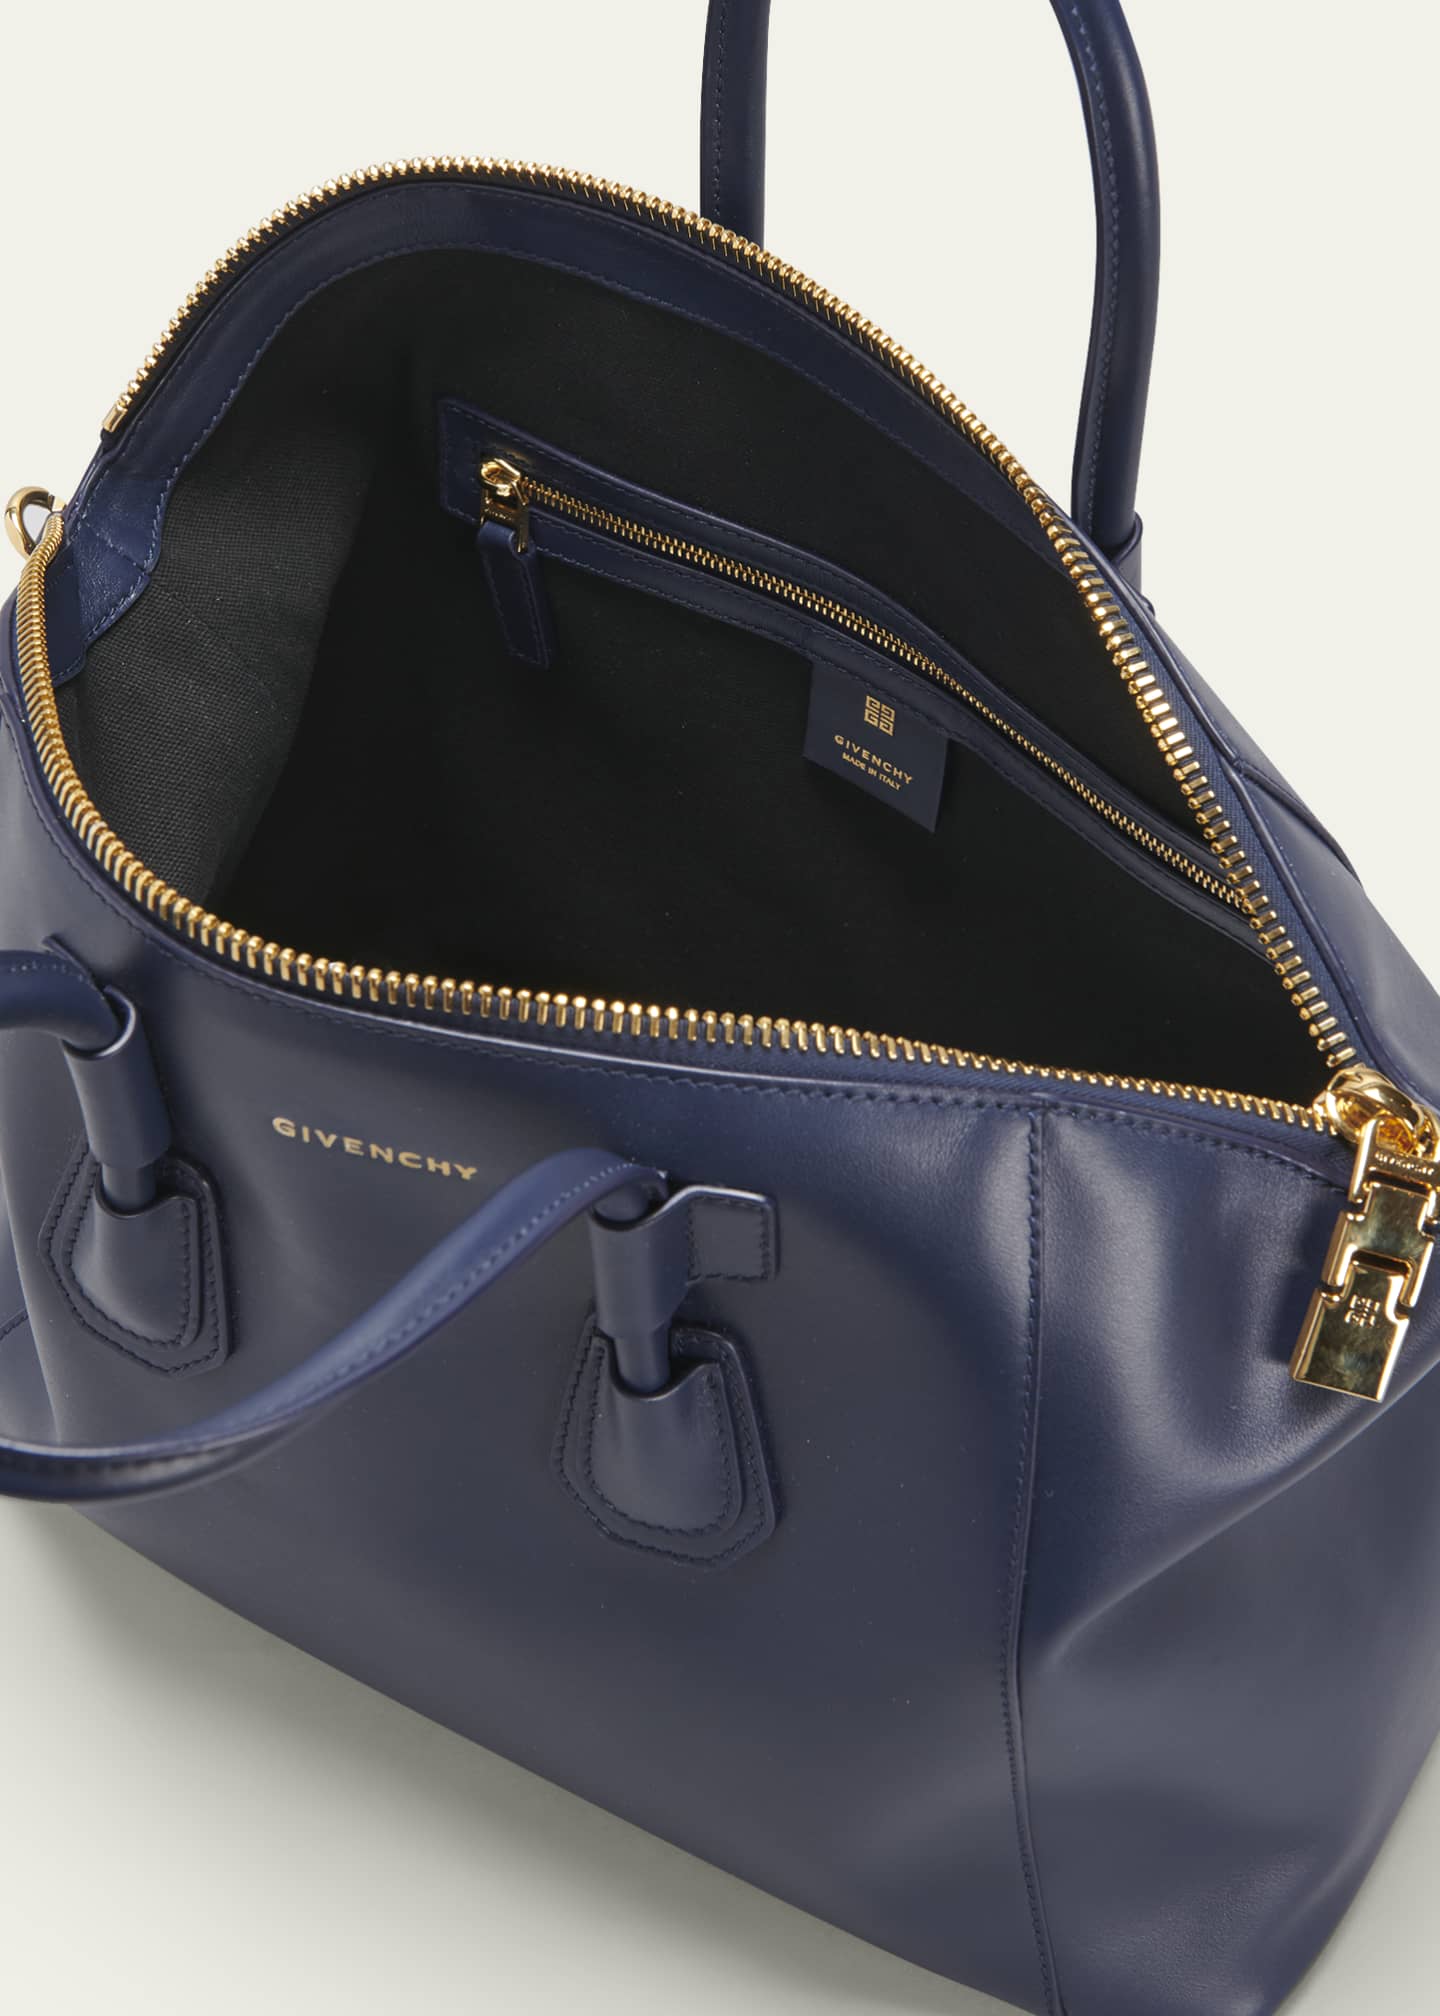 Givenchy Small Antigona Sport Bag in Calf Leather - Bergdorf Goodman